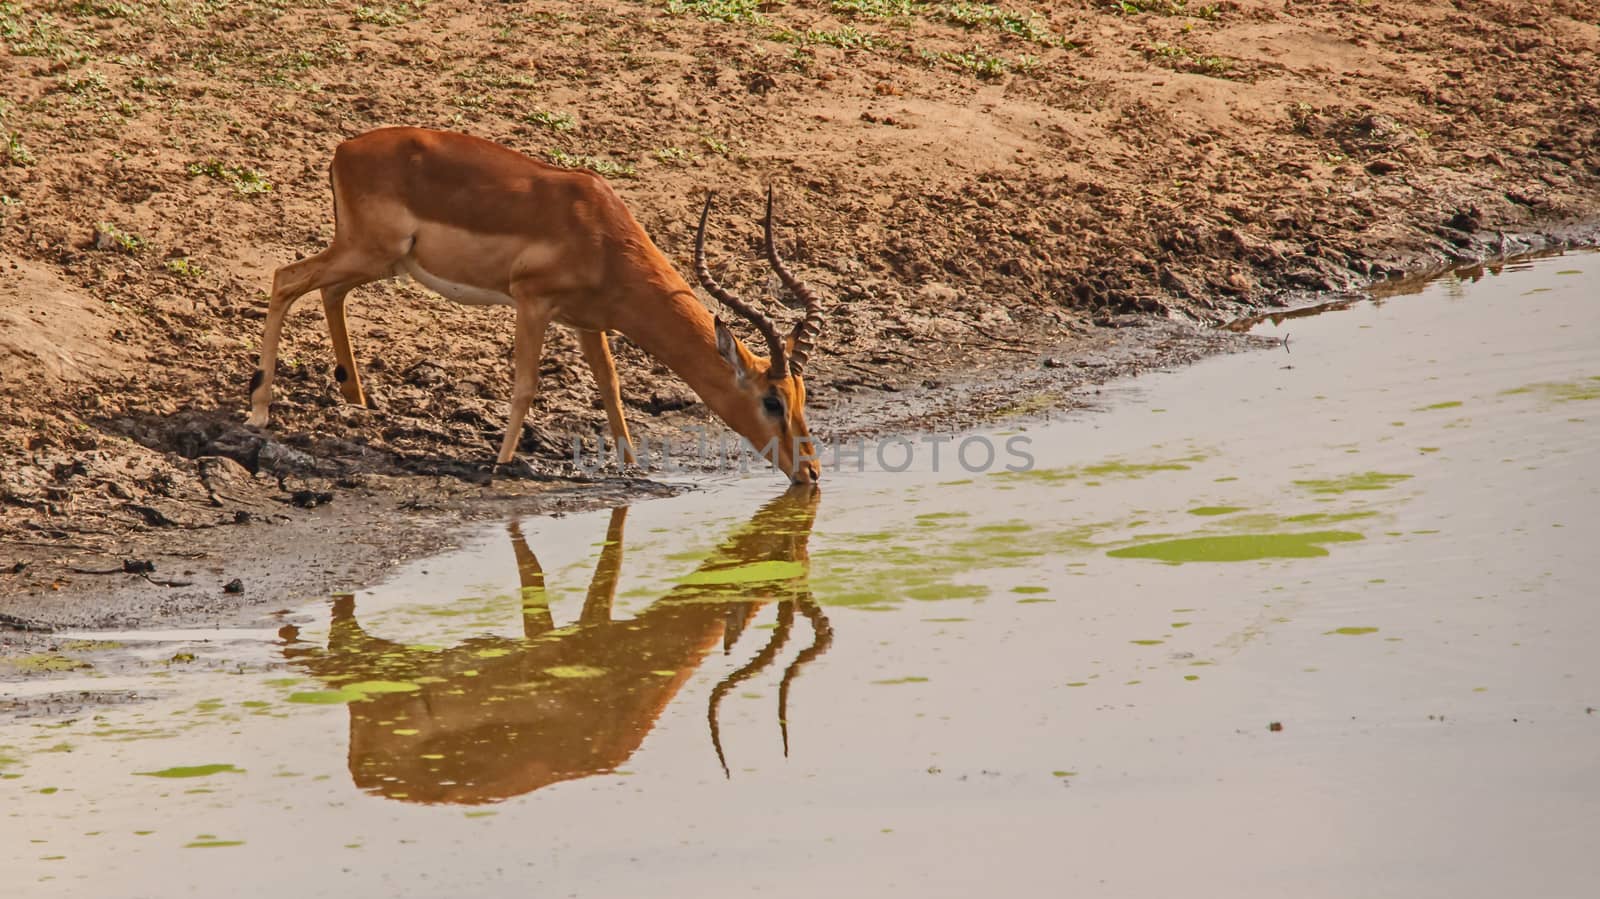 Impala Ram drinking water by kobus_peche